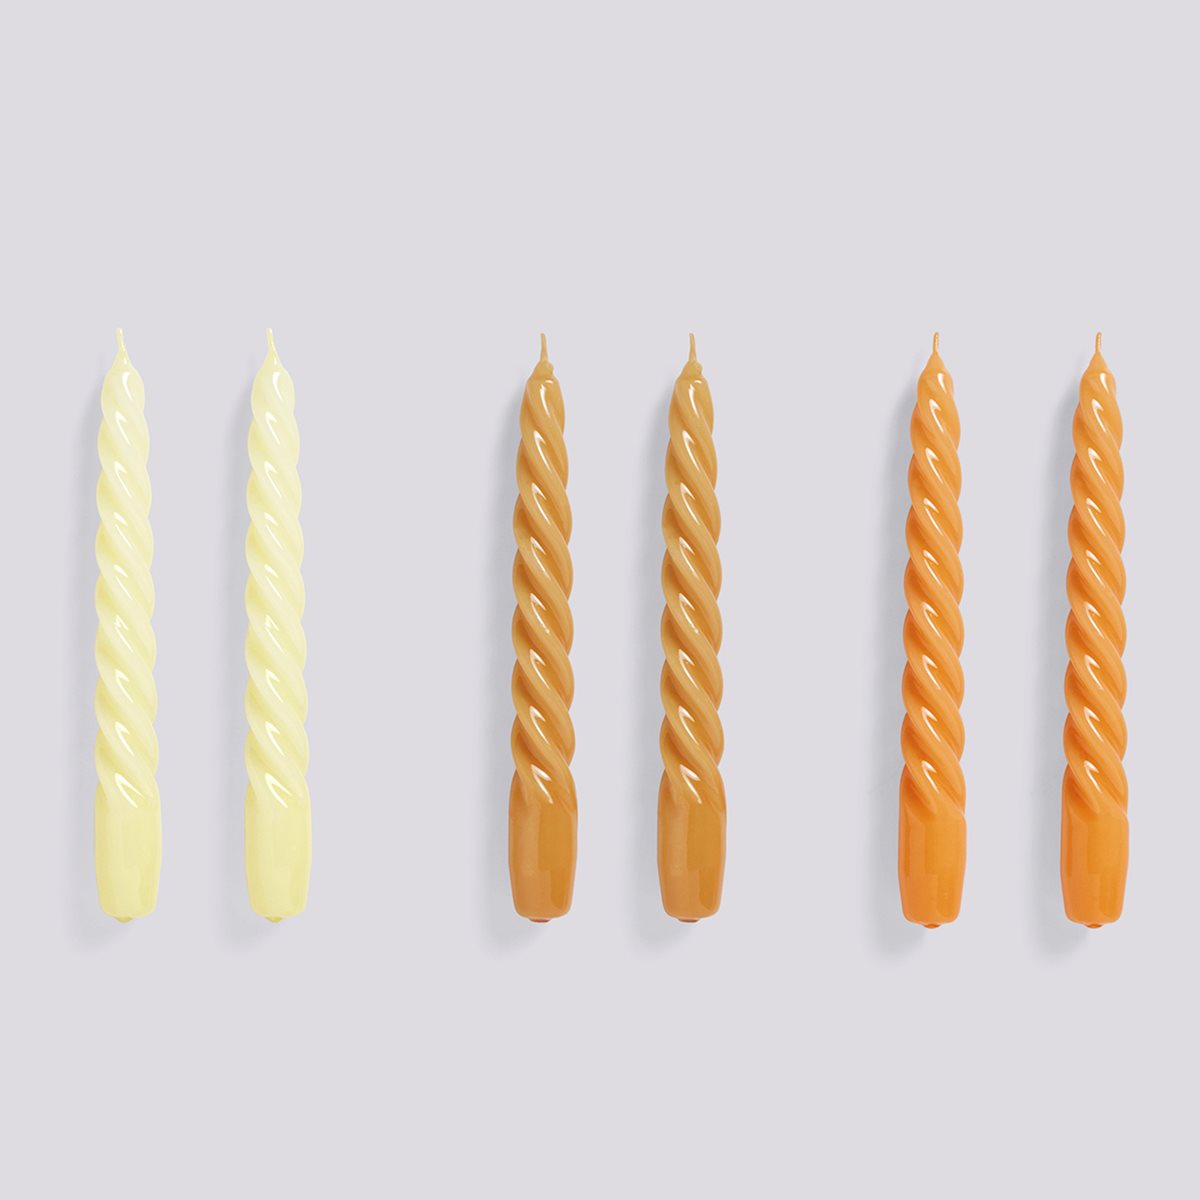 HAY Twisted Candles Set of 6 - Citrus/Light Caramel/Tangerine